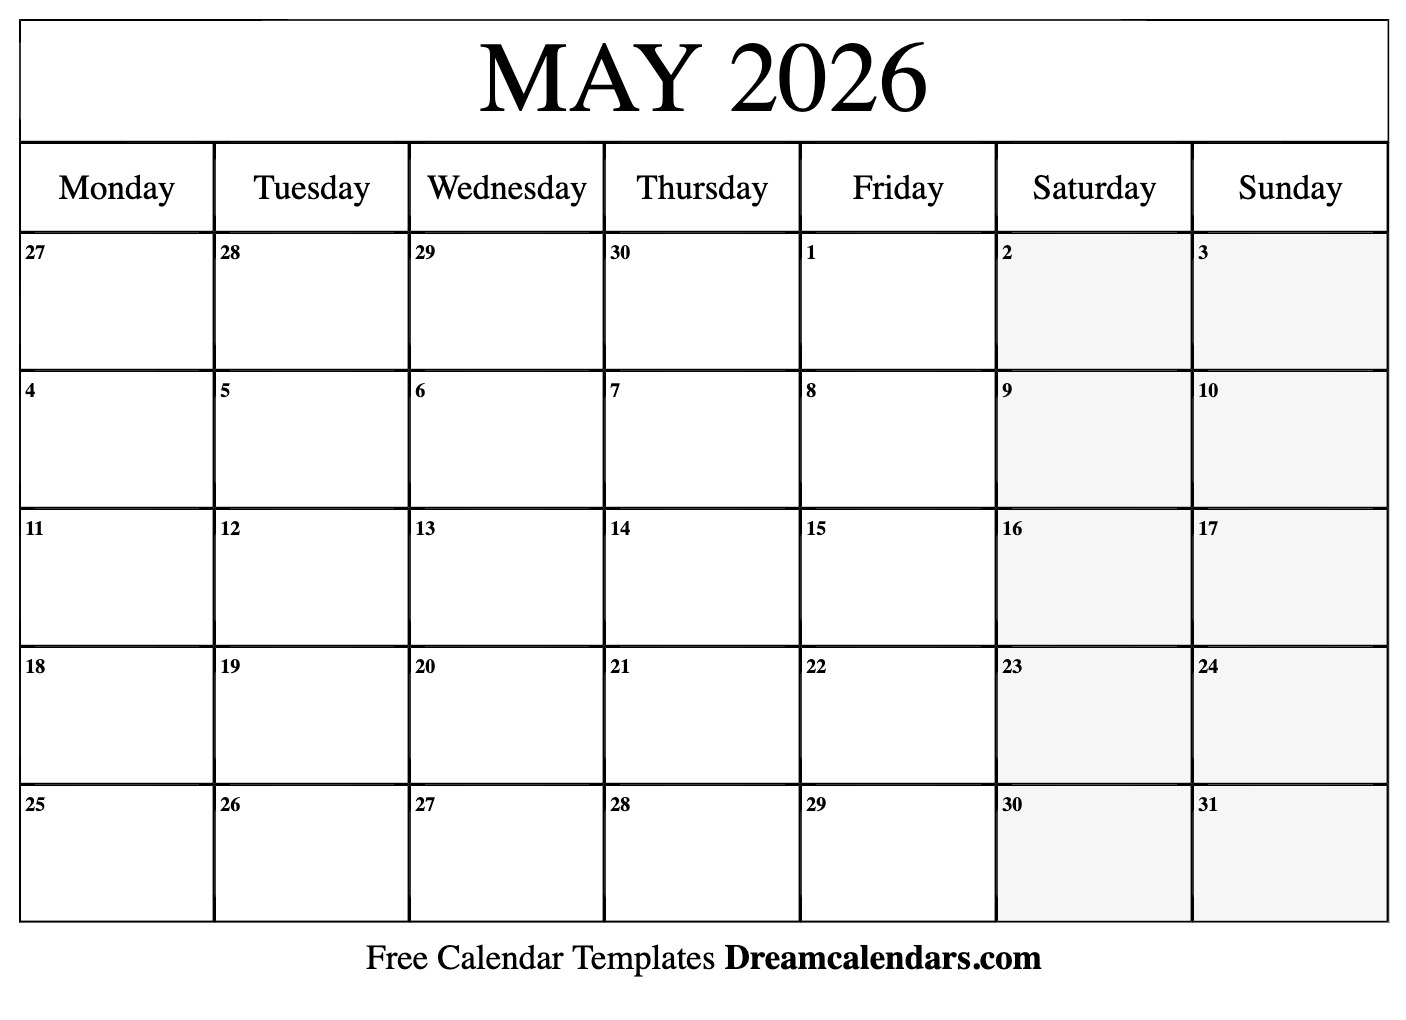 May 2026 Calendar Free Blank Printable With Holidays